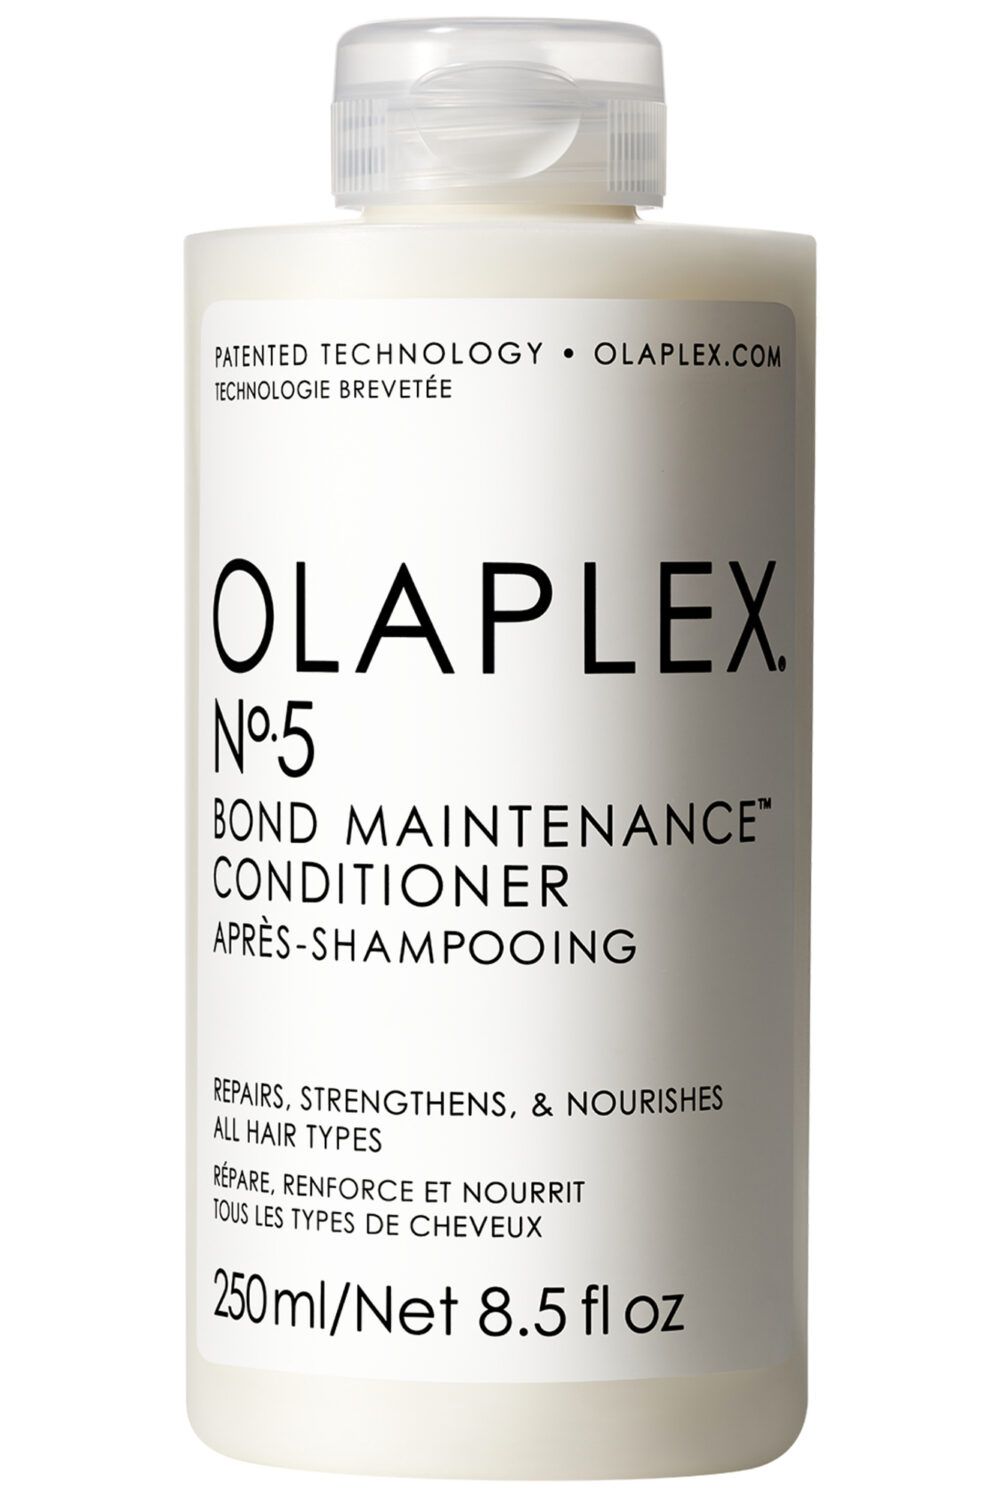 OLAPLEX - Après-shampoing bond maintenance n°5